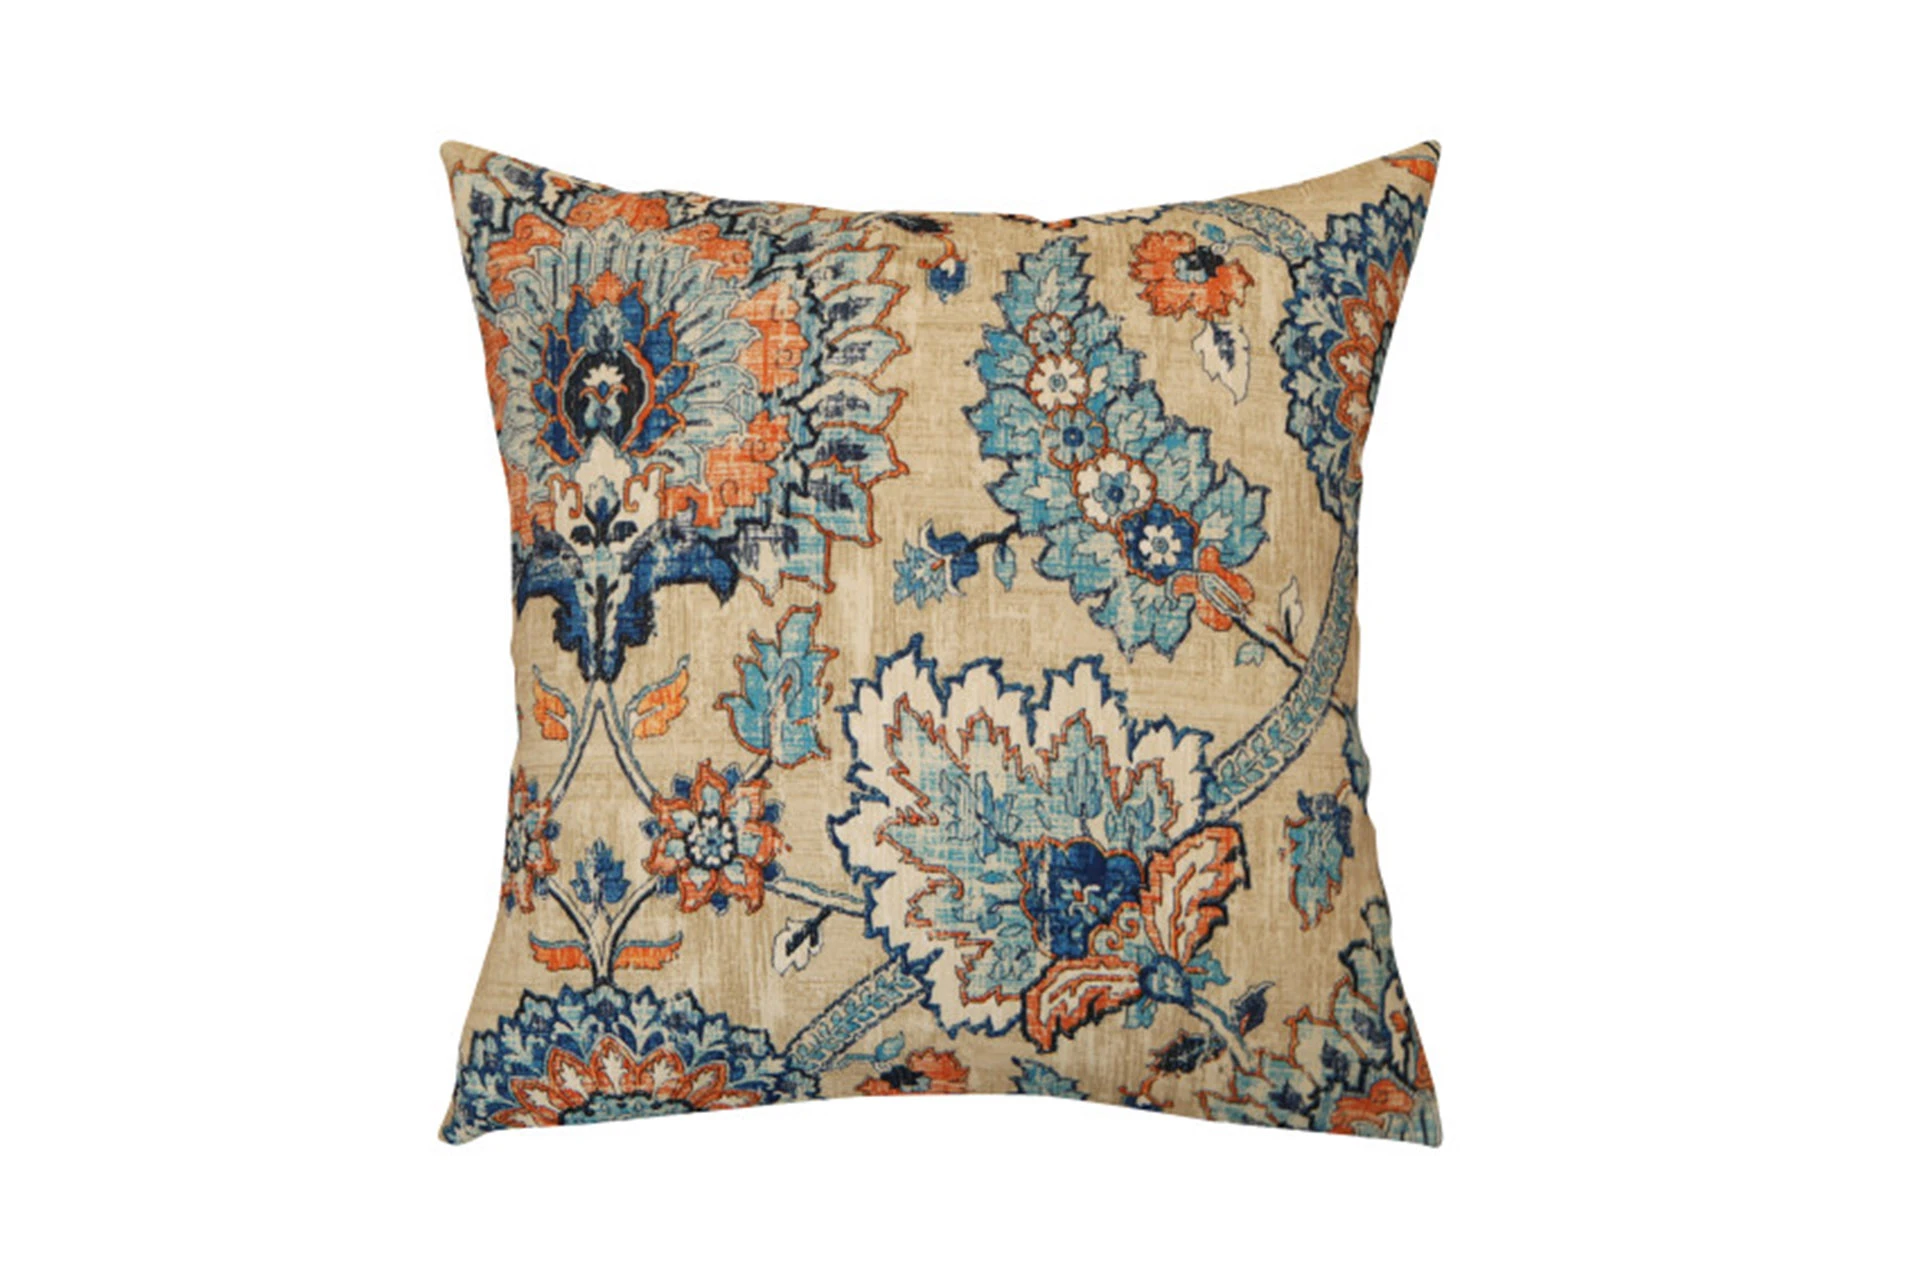 Outdoor Accent Pillow Floral Damask Blue Orange 18x18 Living Spaces